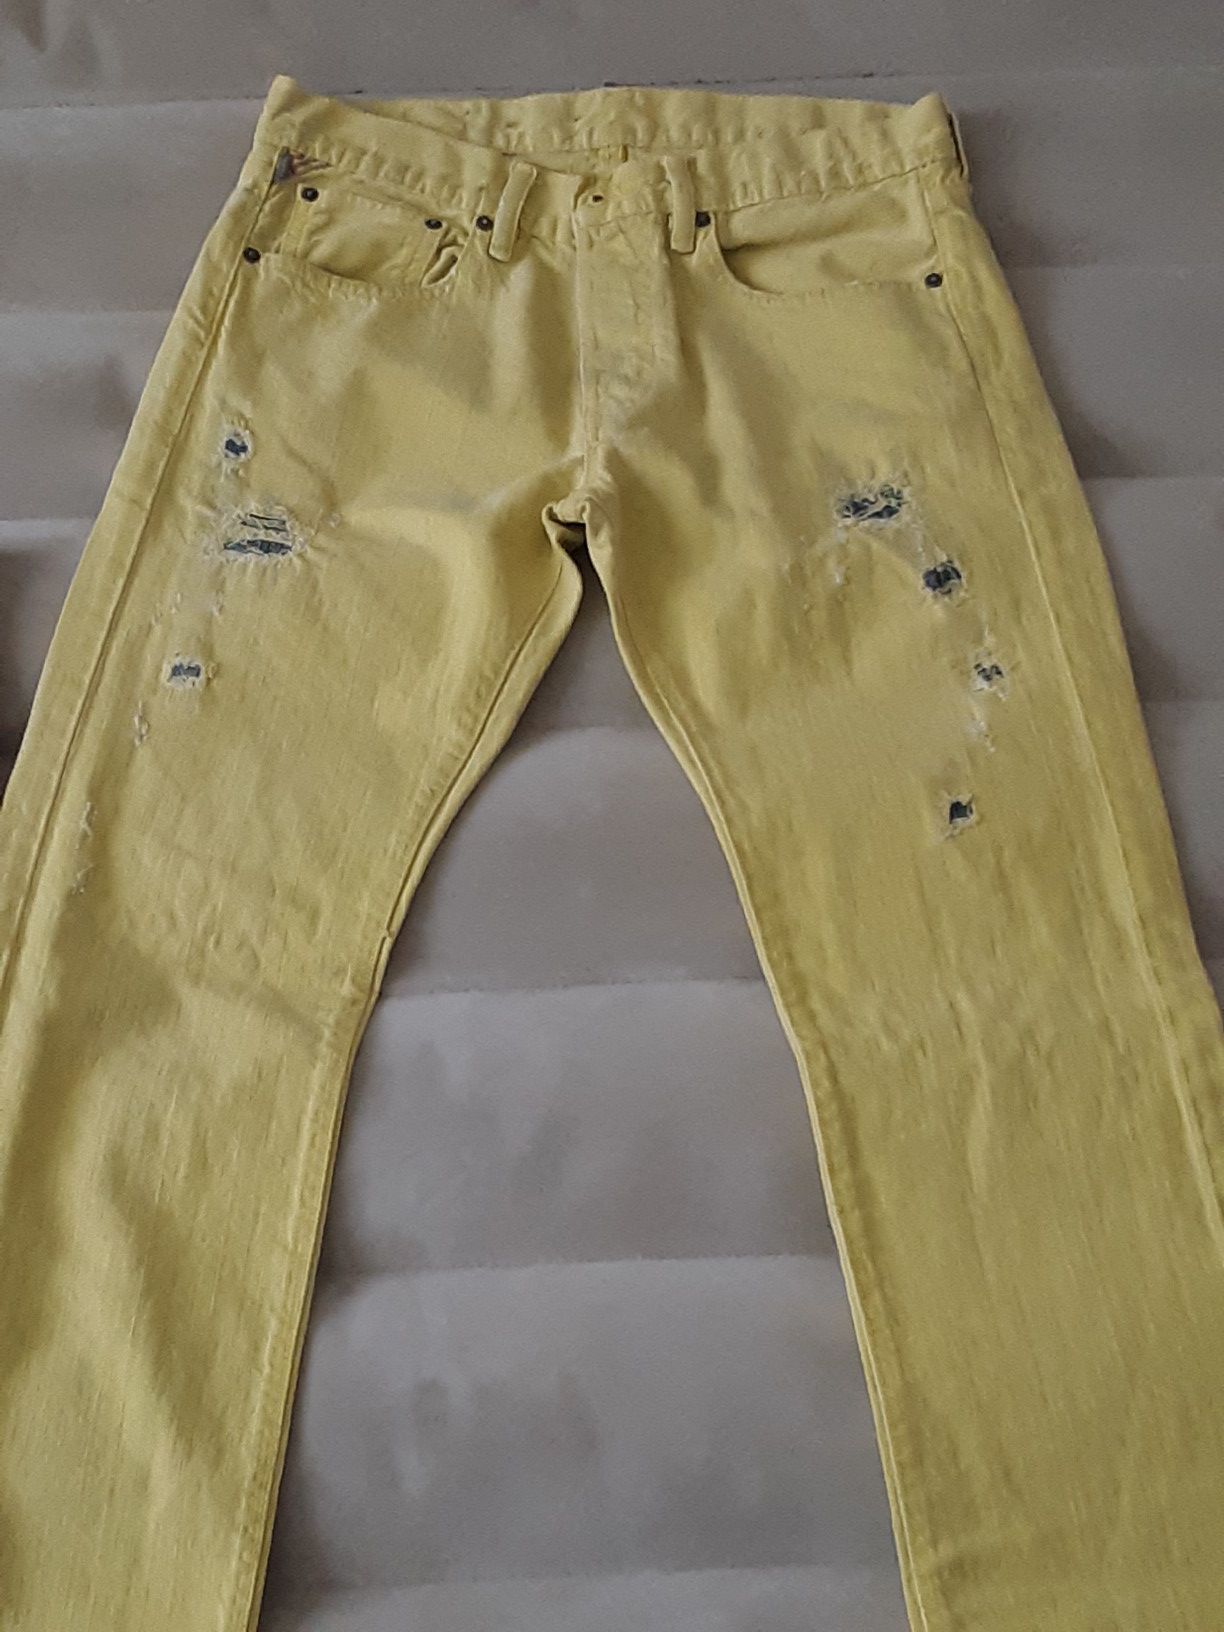 Ralph Lauren and Bananna republic and Levi designer jeans.